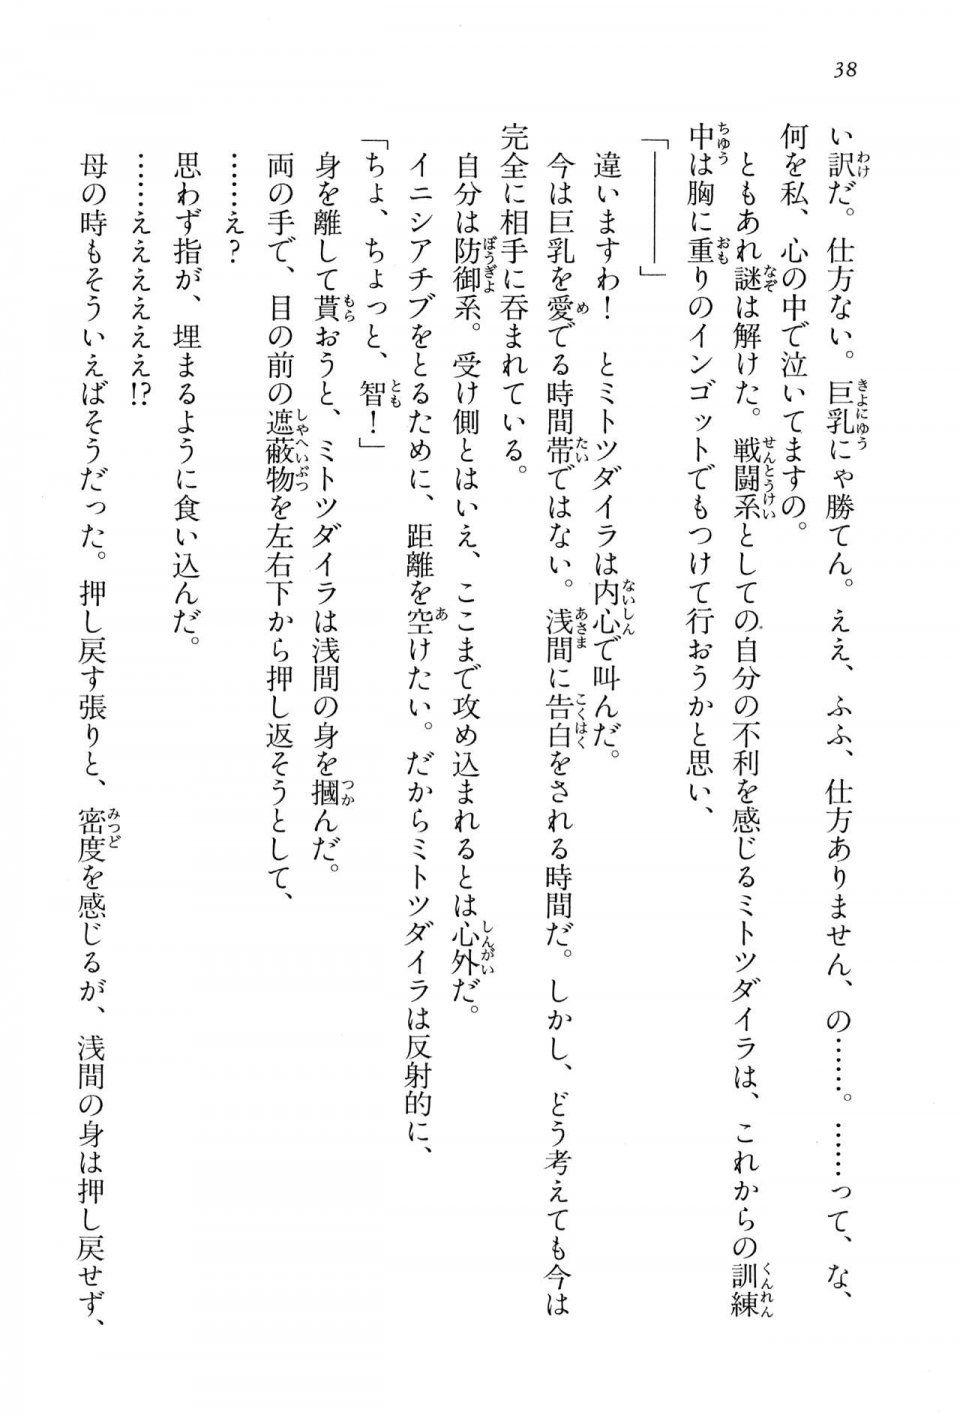 Kyoukai Senjou no Horizon BD Special Mininovel Vol 2(1B) - Photo #42